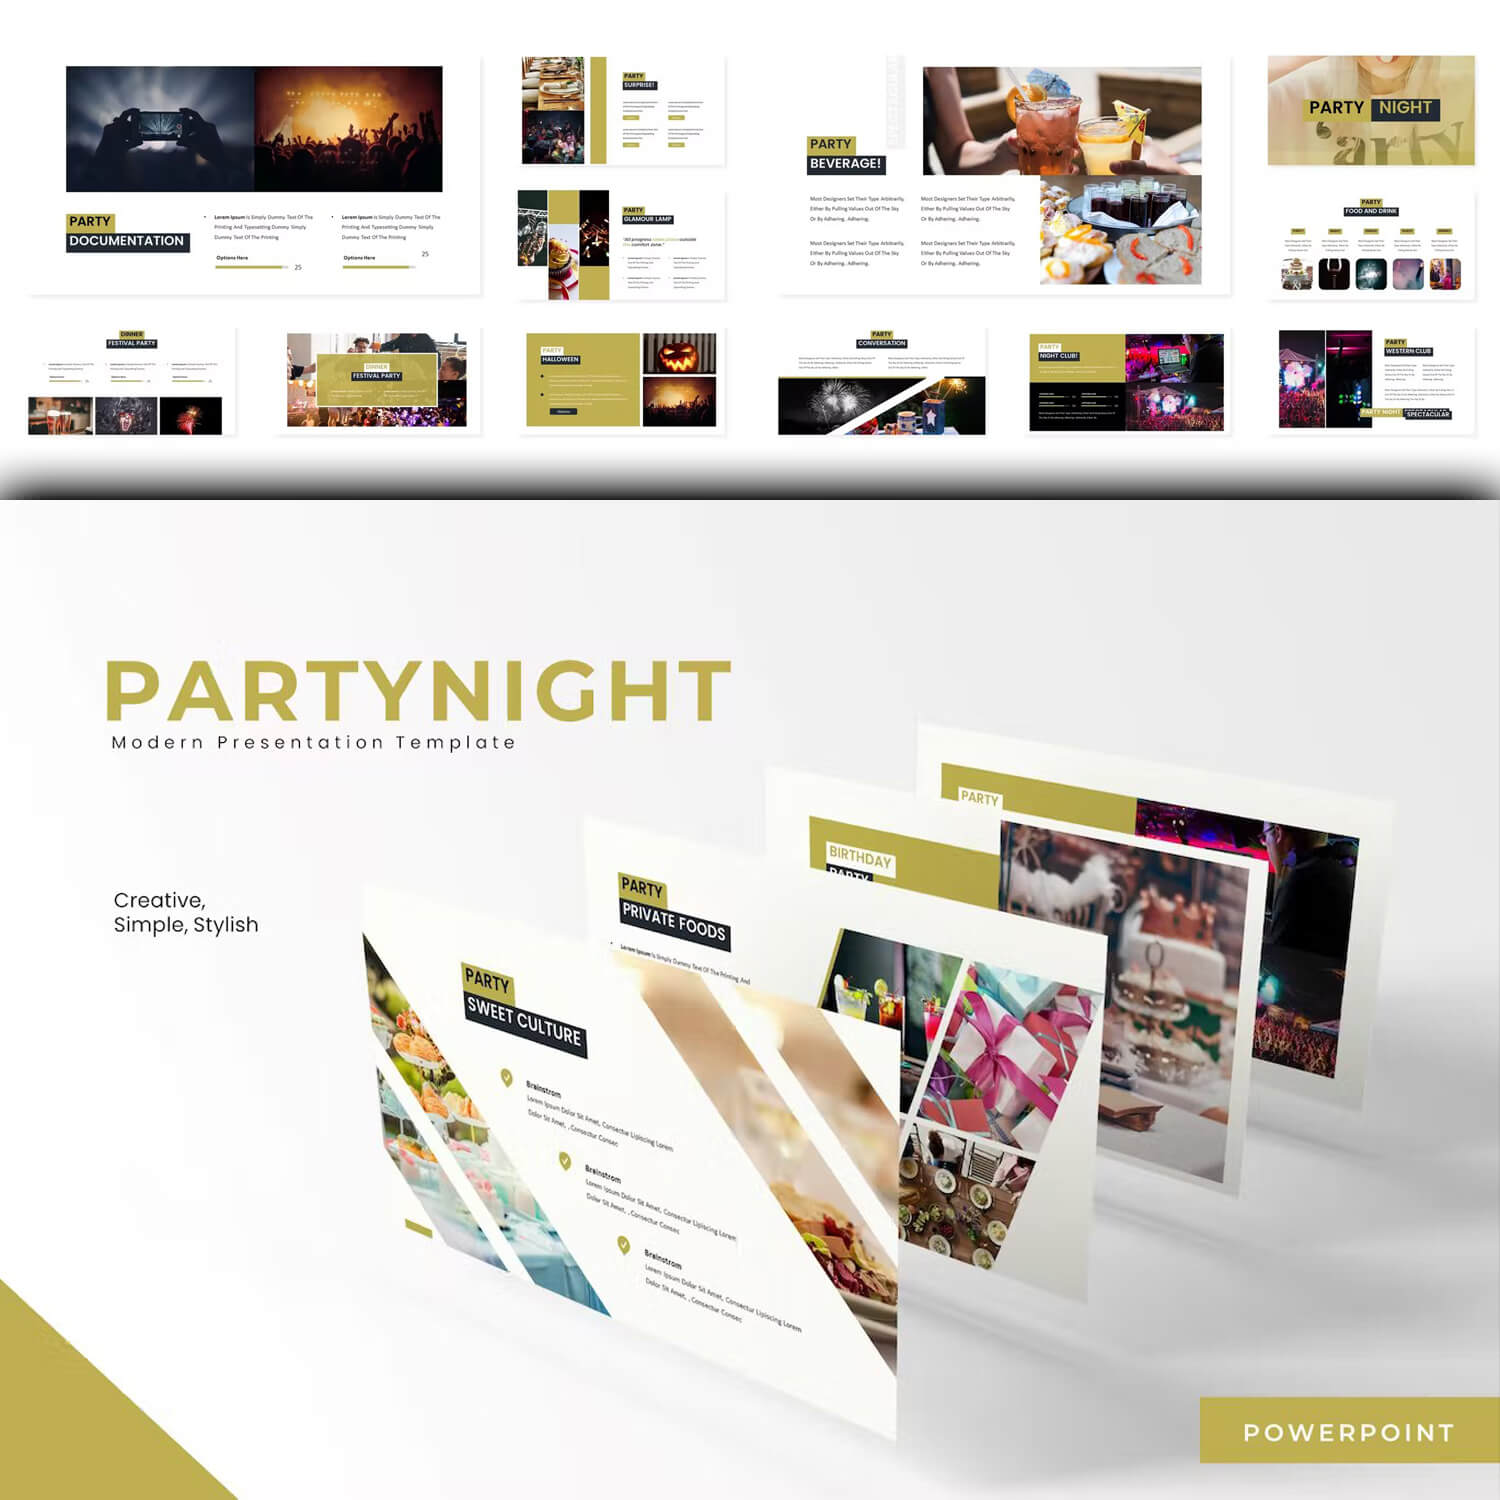 Creative, simple, stylish partynight presentation.